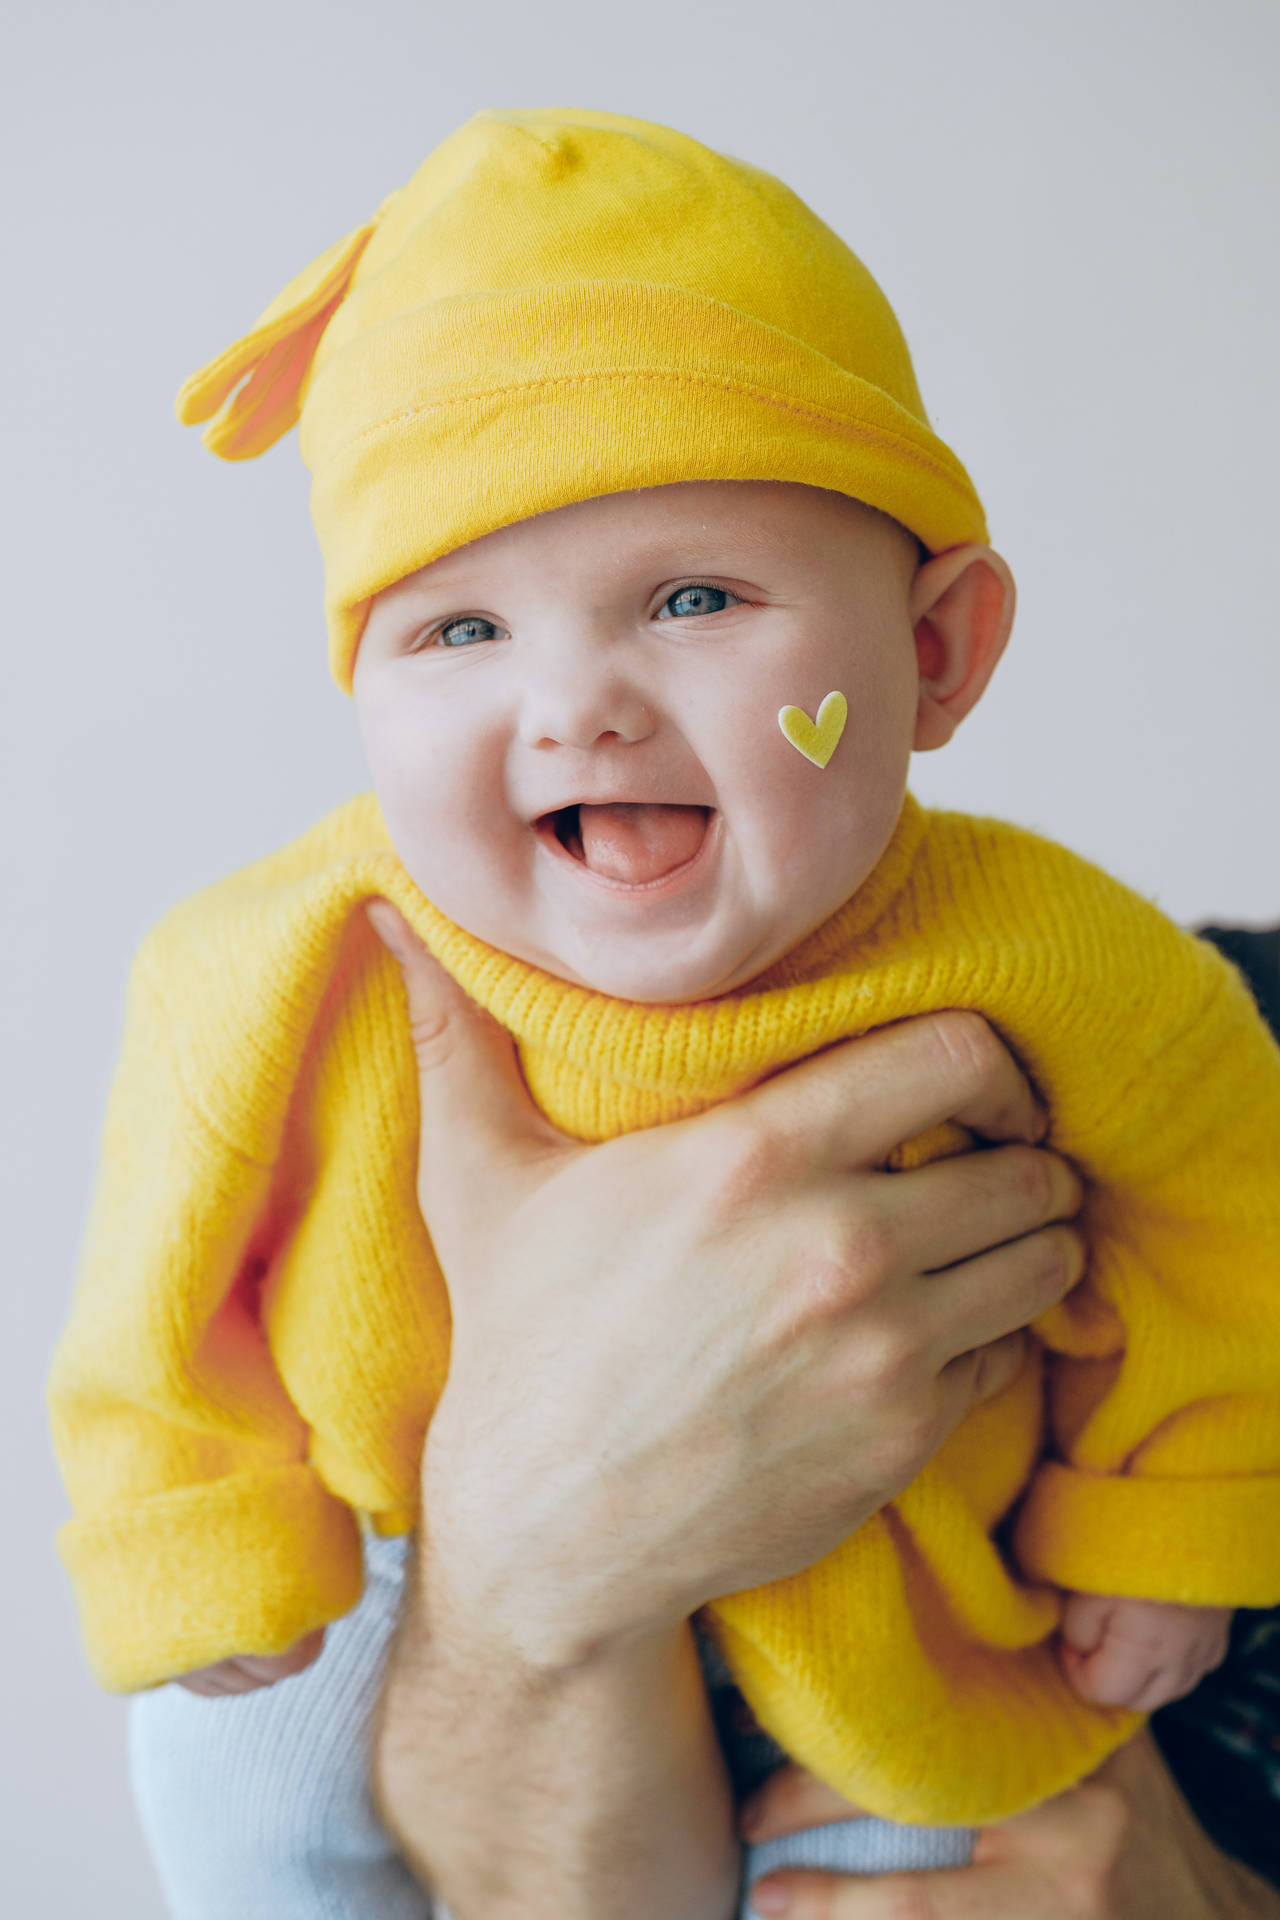 Smiling Baby Hd Wallpaper